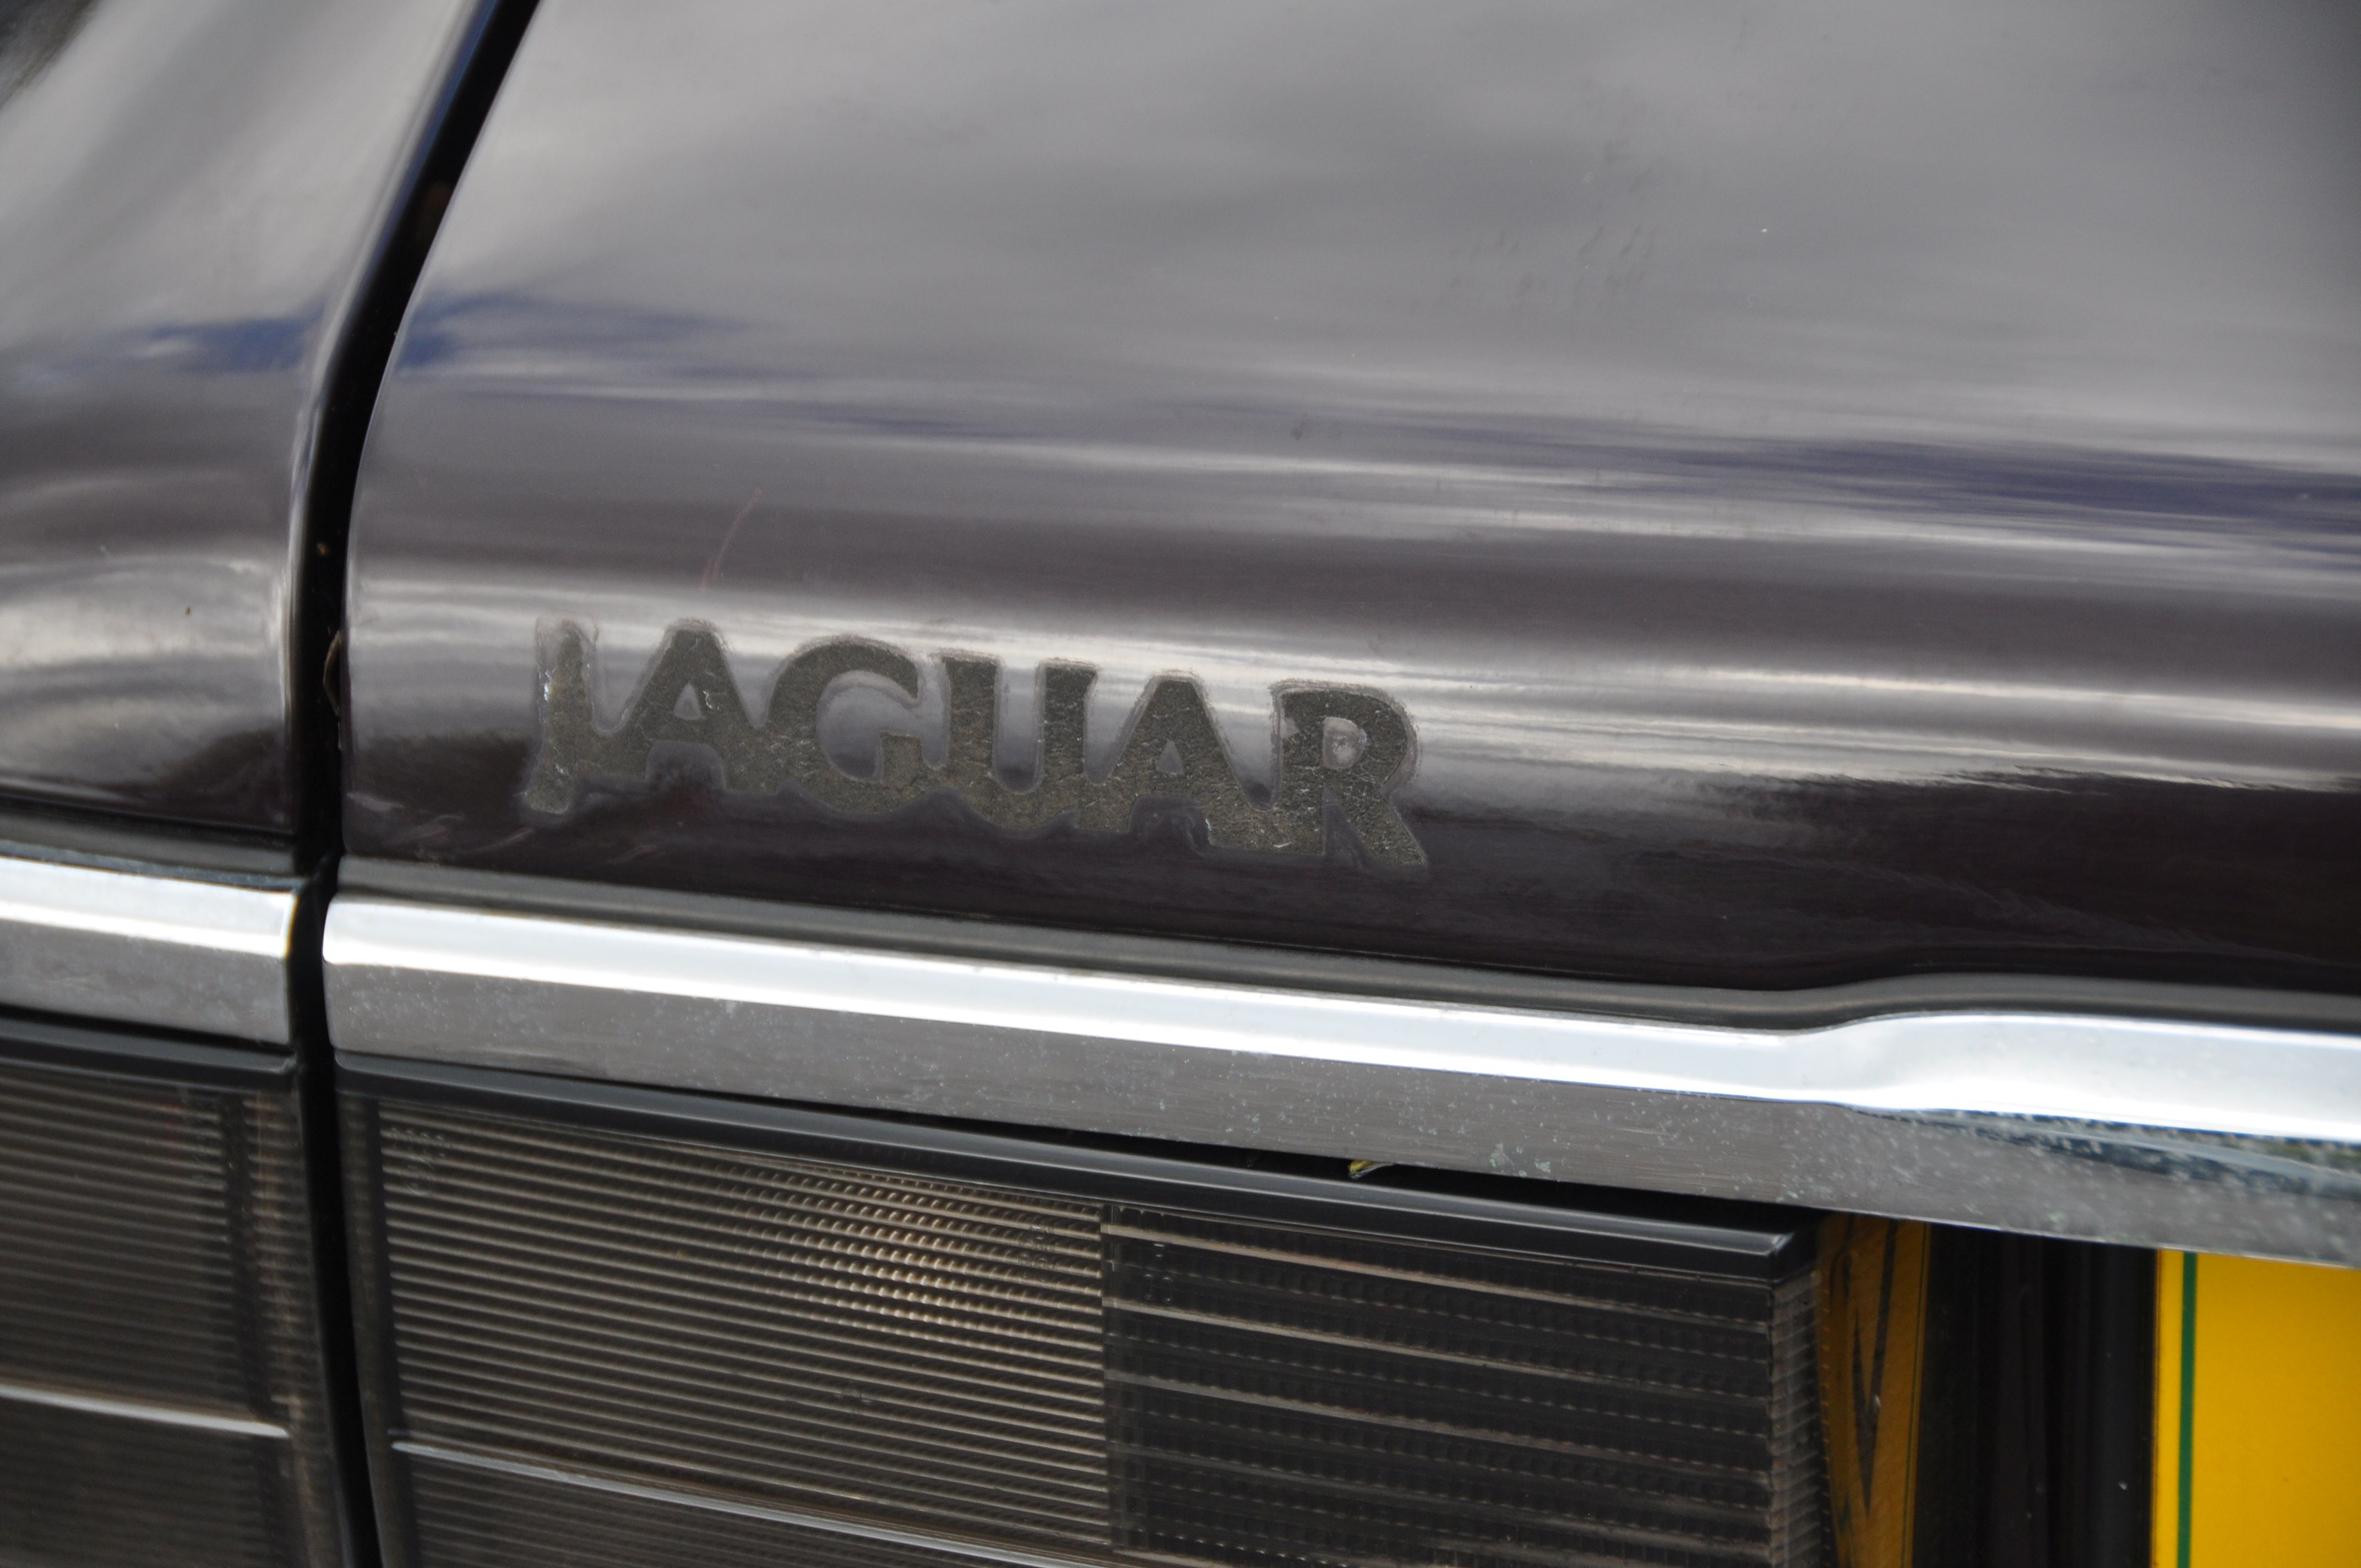 A 1994 JAGUAR XJ-S 4.0 AUTO SPORTS SALOON CAR in burgundy, 3980cc straight 6 cylinder petrol engine, - Image 15 of 26